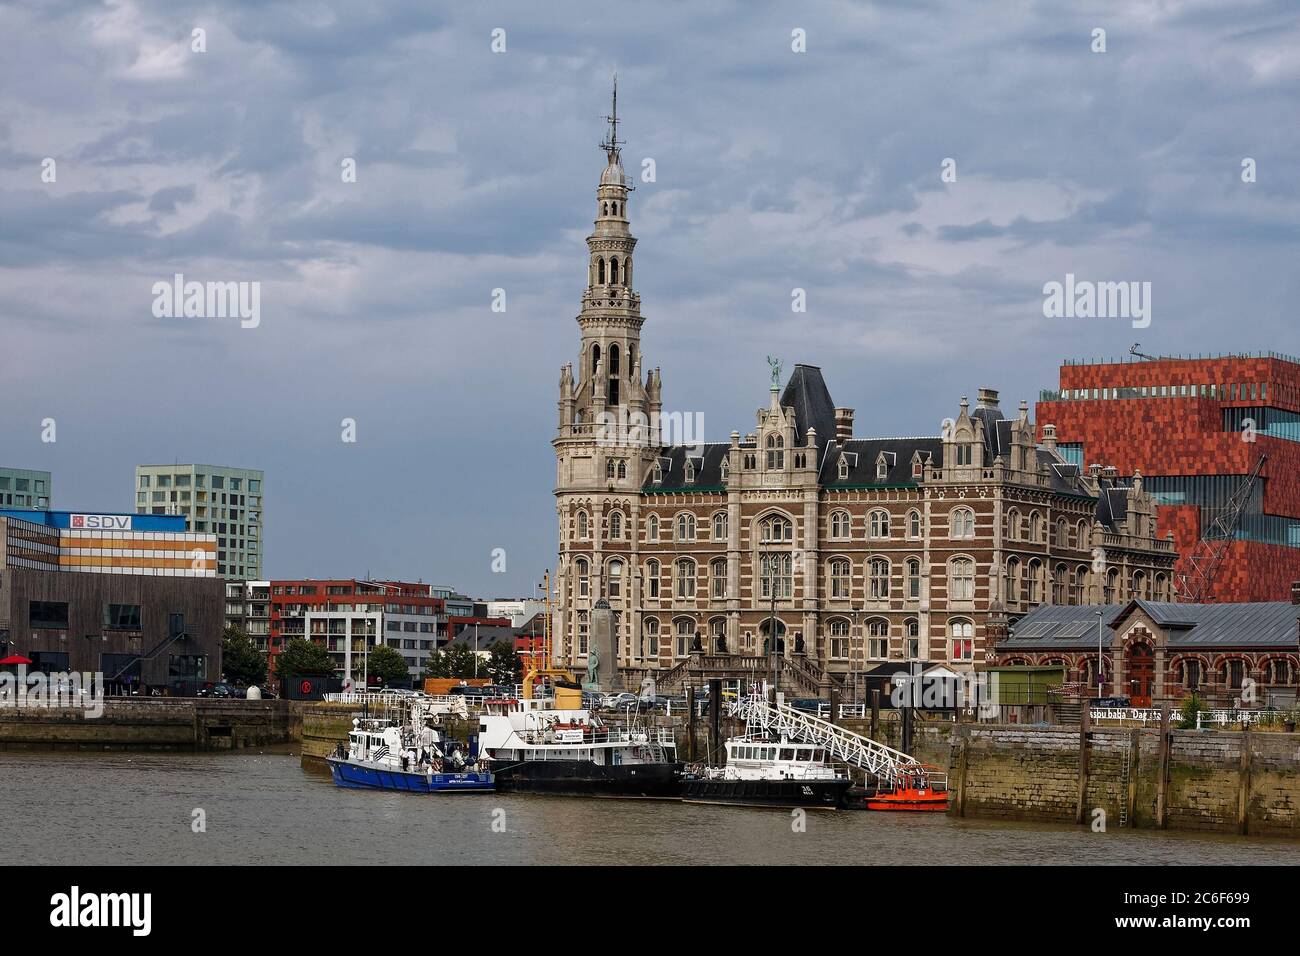 Pilotage Authority Building; 1894; ornate, old, spire, many windows, boats, maritime scene, River Scheldt, water, Flanders; Europe; Antwerp; Belgium Stock Photo